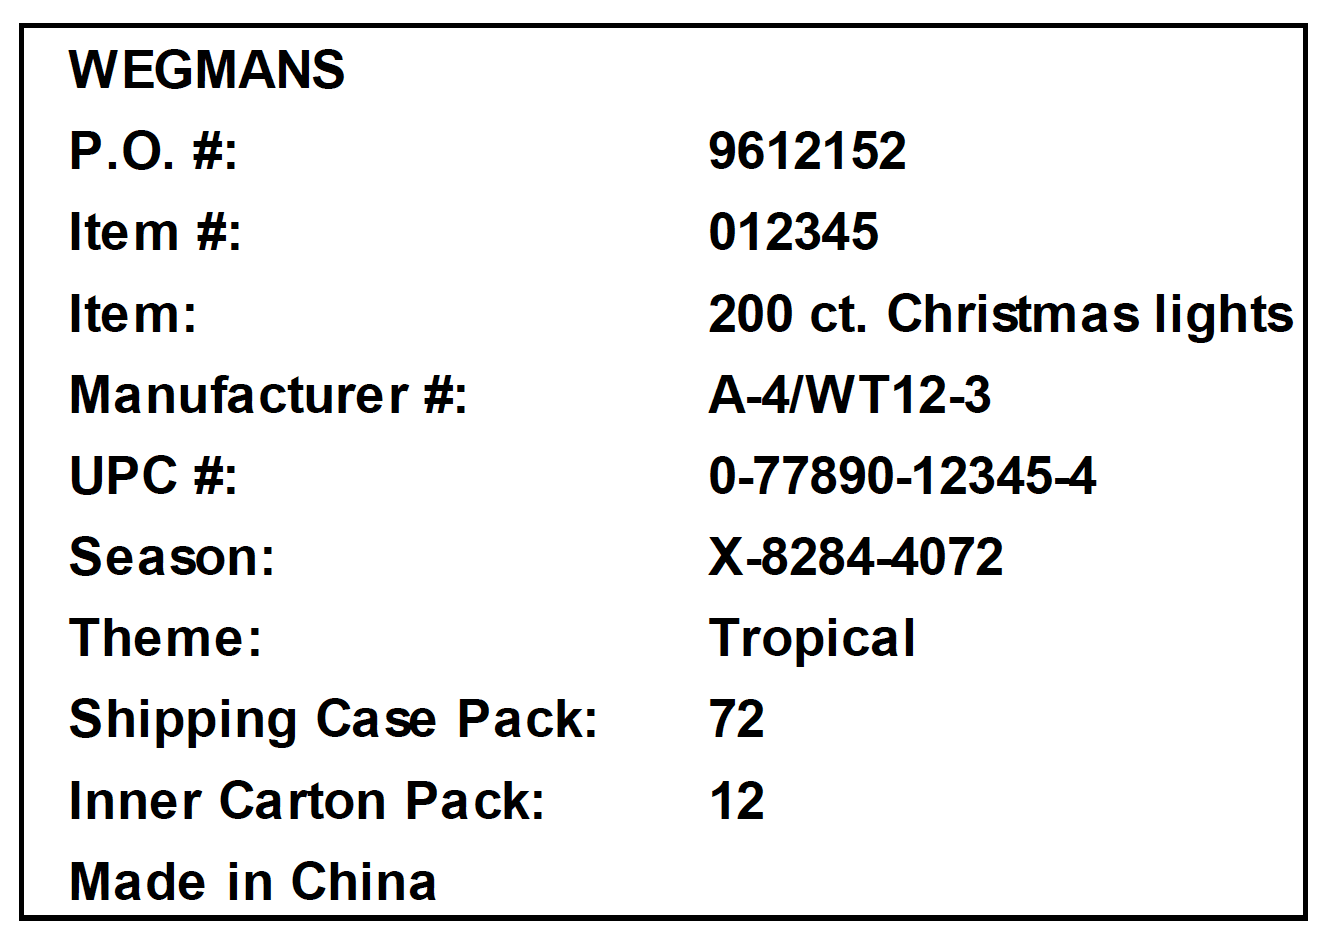 Example of Direct Import Shipment Carton Marking